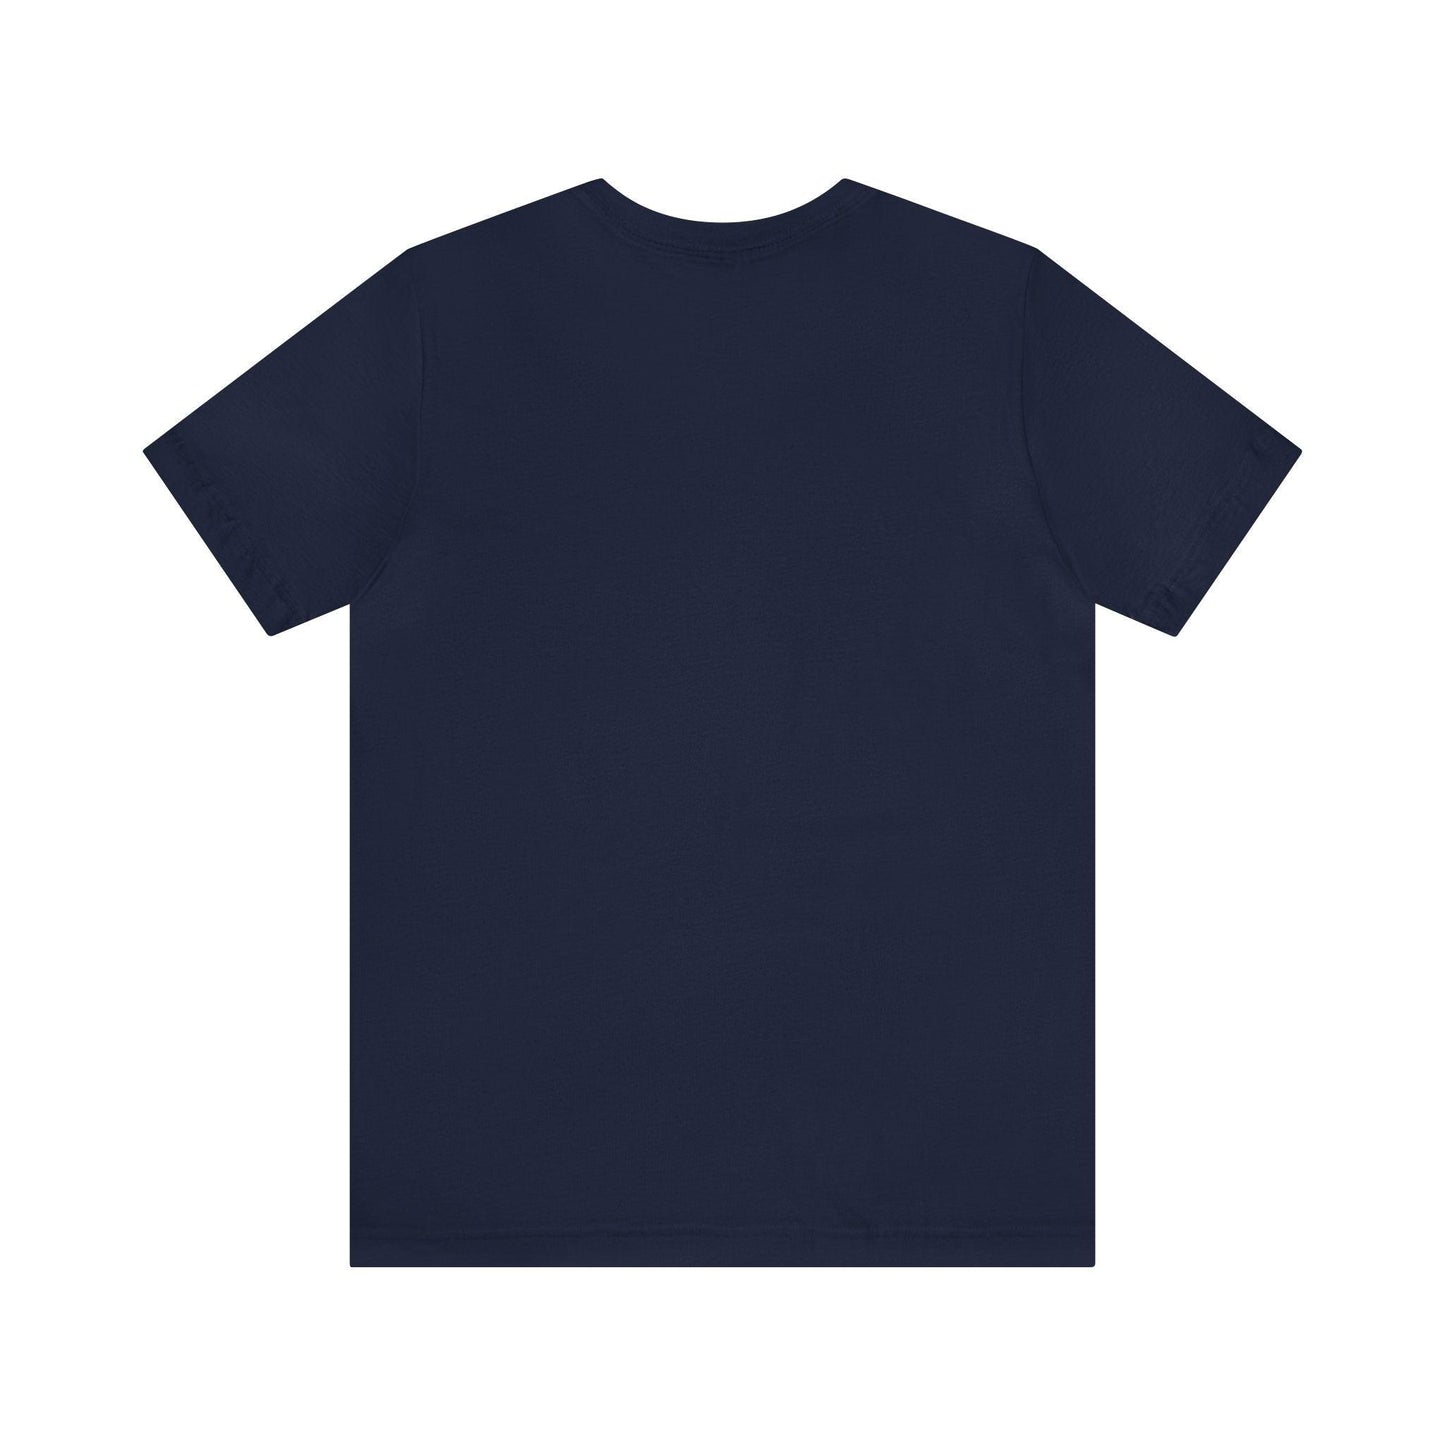 MotherLand Nature - Tee-shirt à manches courtes en jersey unisexe